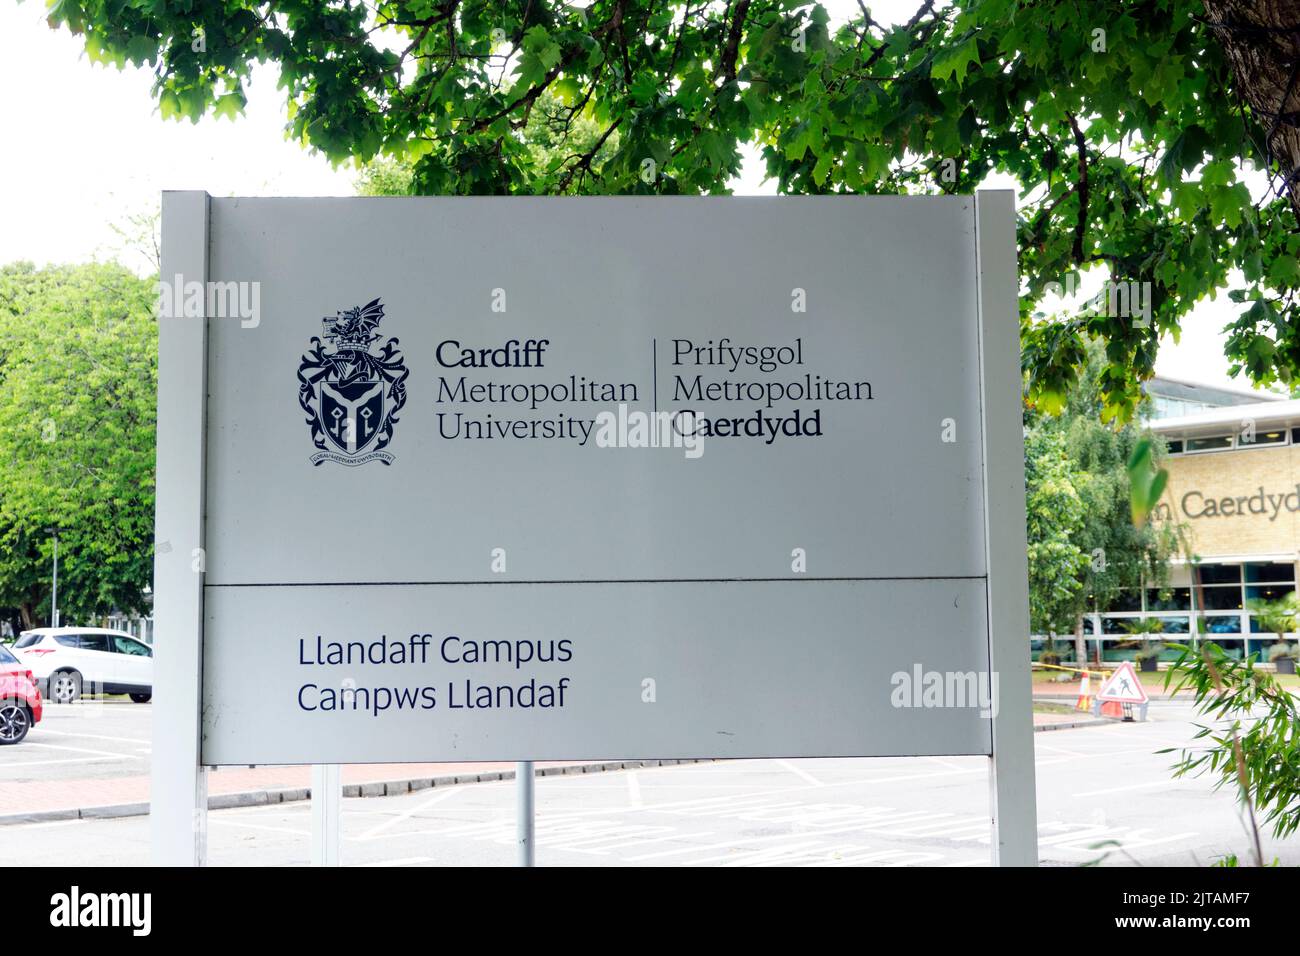 Cardiff Metropolitan University, Lllandaff Campus, Cardiff, Wales. Stockfoto